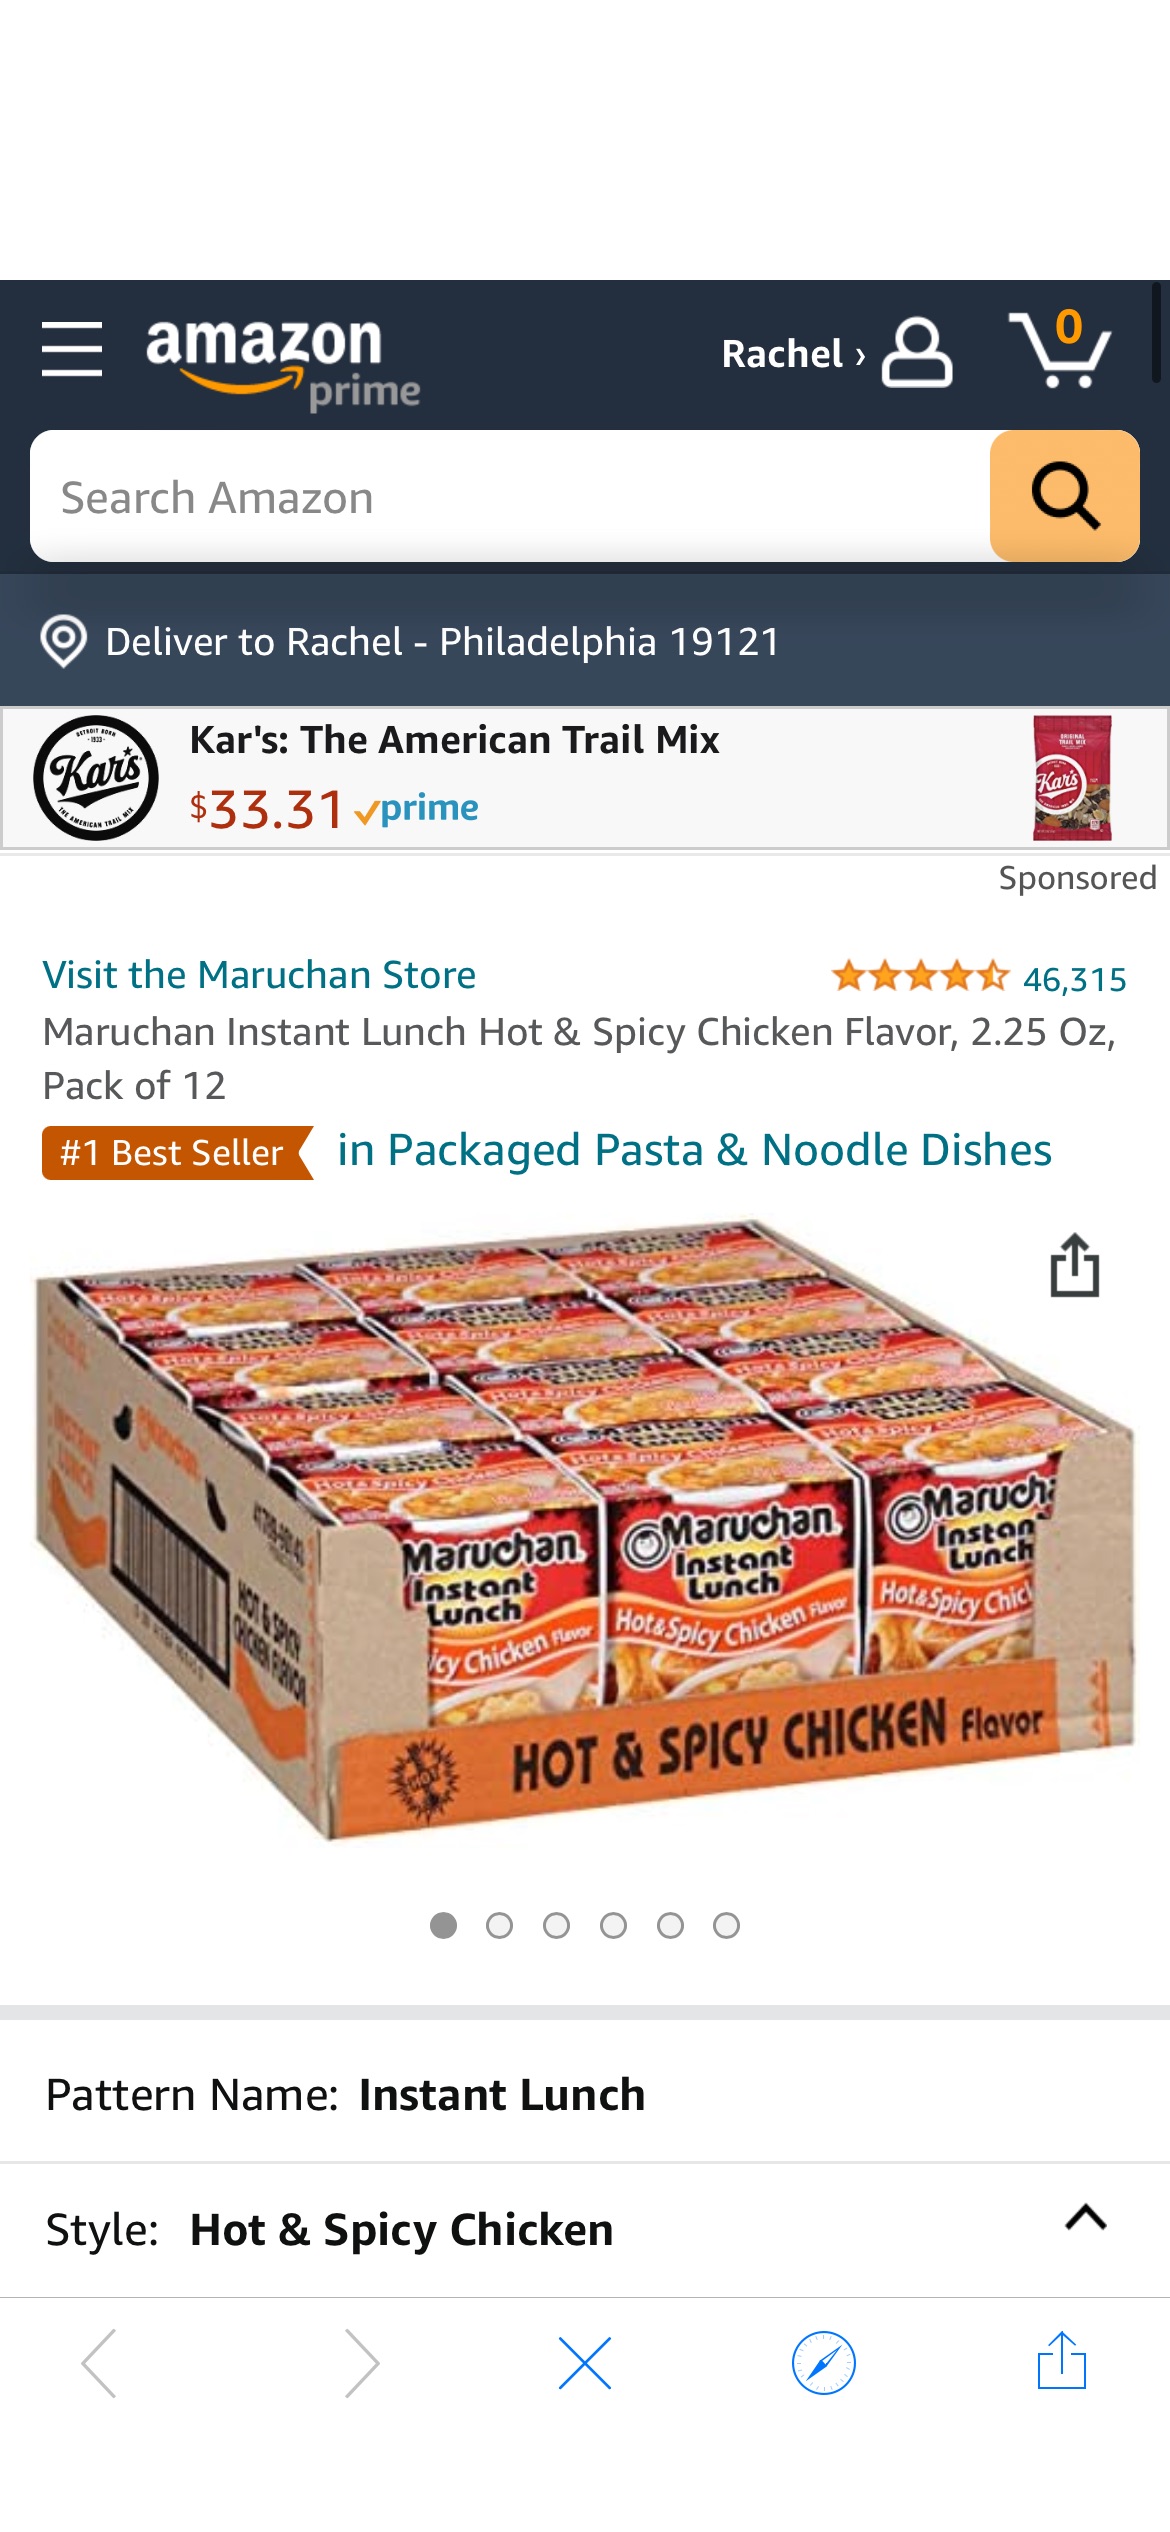 Amazon.com : Maruchan Instant Lunch Hot & Spicy Chicken Flavor, 2.25 Oz, Pack of 12 : Ramen Noodles : Grocery & Gourmet Food